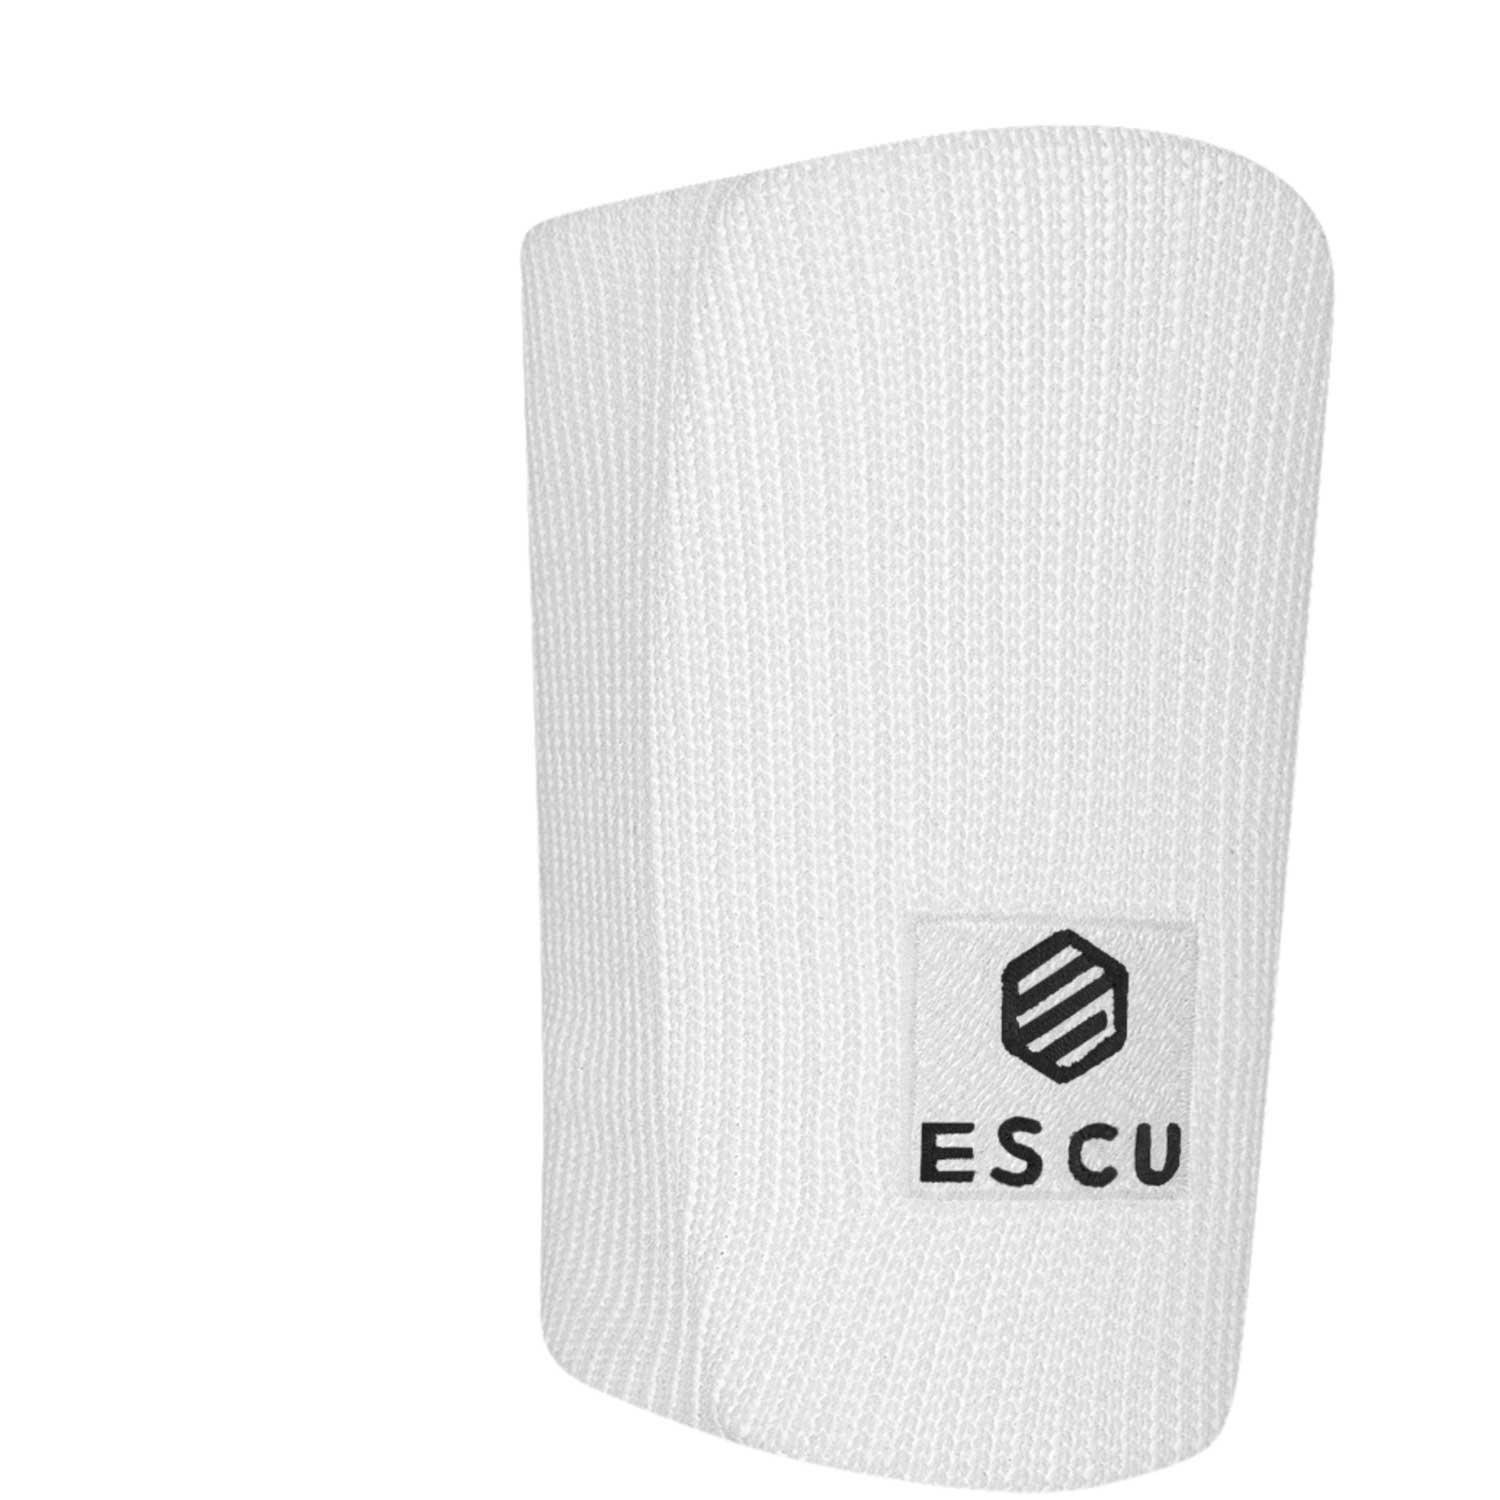 ESCU Cricket Wrist / Armguard - Senior